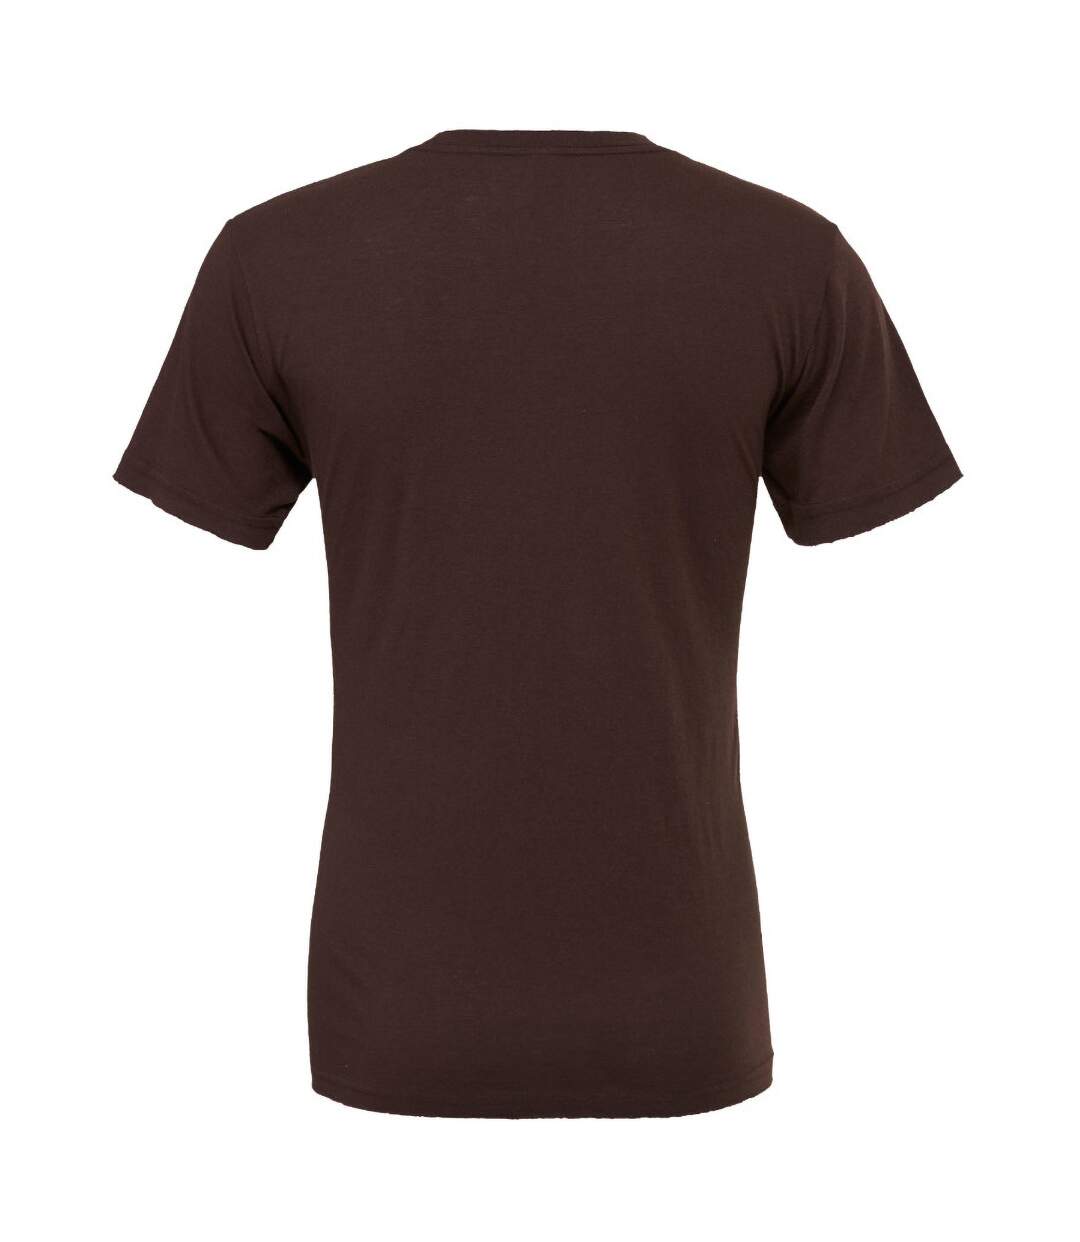 Canvas Unisex Jersey Crew Neck Short Sleeve T-Shirt (Brown) - UTBC163